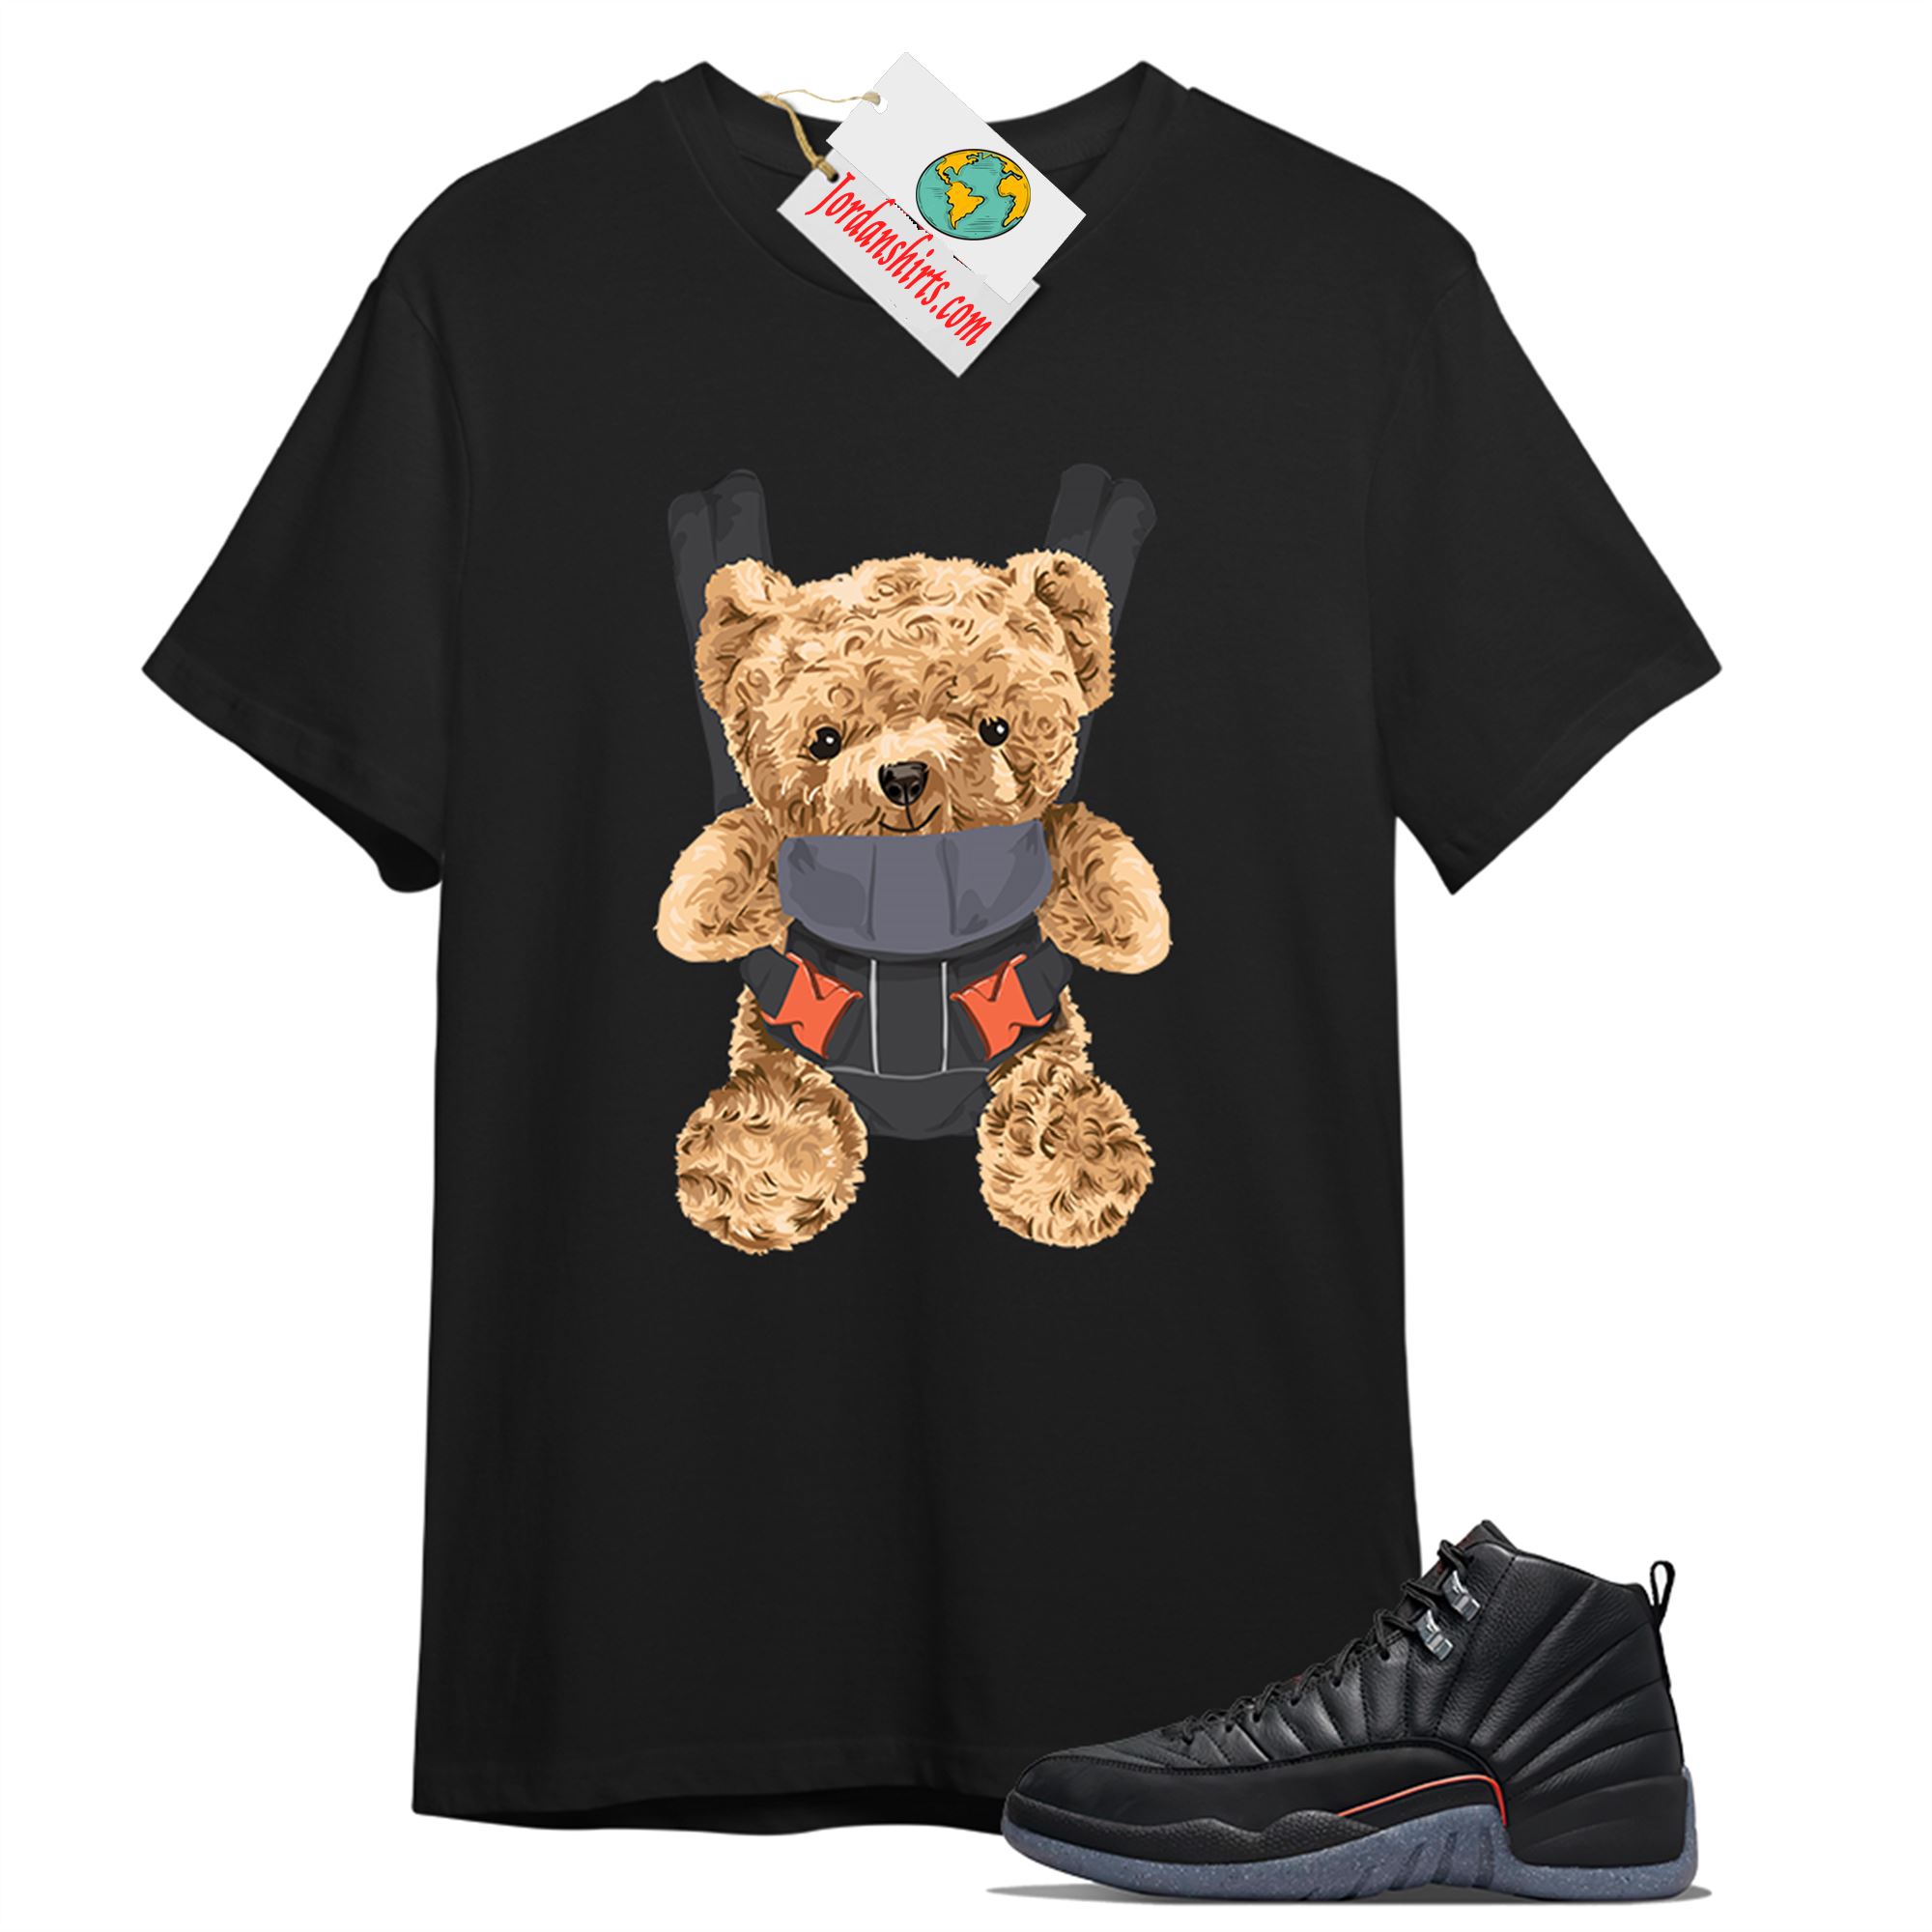 Jordan 12 Shirt, Teddy Bear Bag Black T-shirt Air Jordan 12 Utility Grind 12s Plus Size Up To 5xl